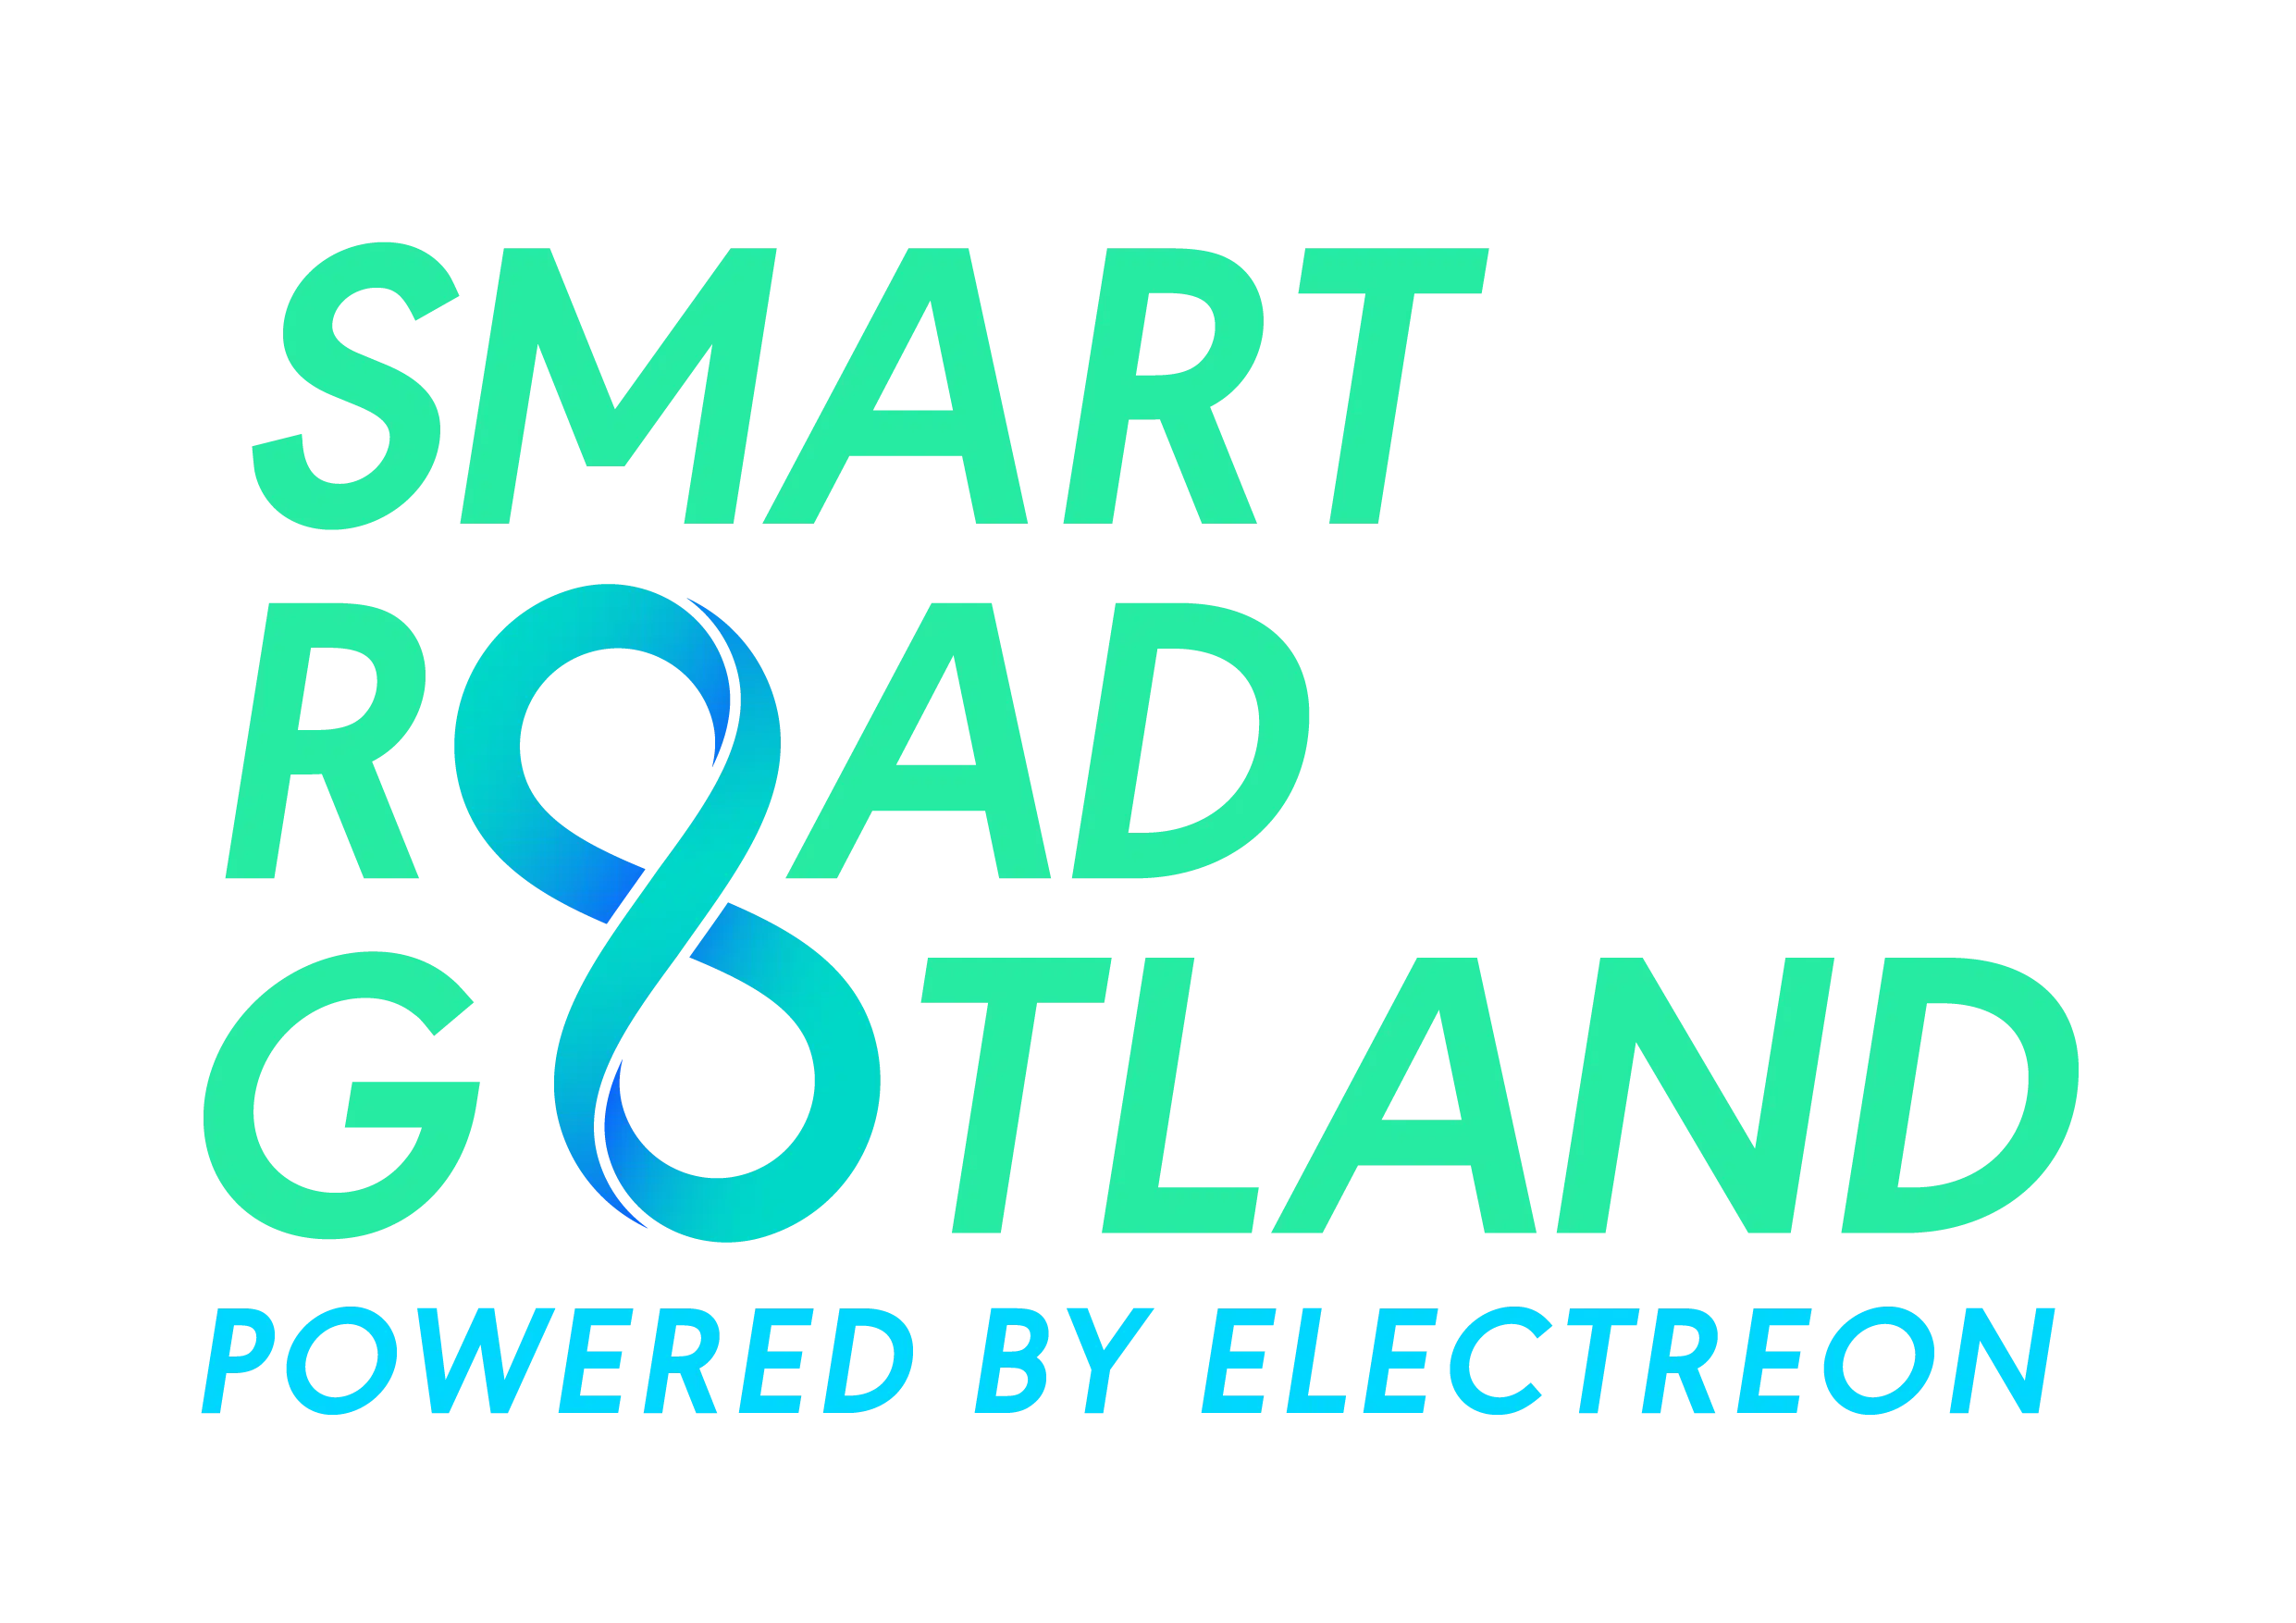 Smart Road Gotland